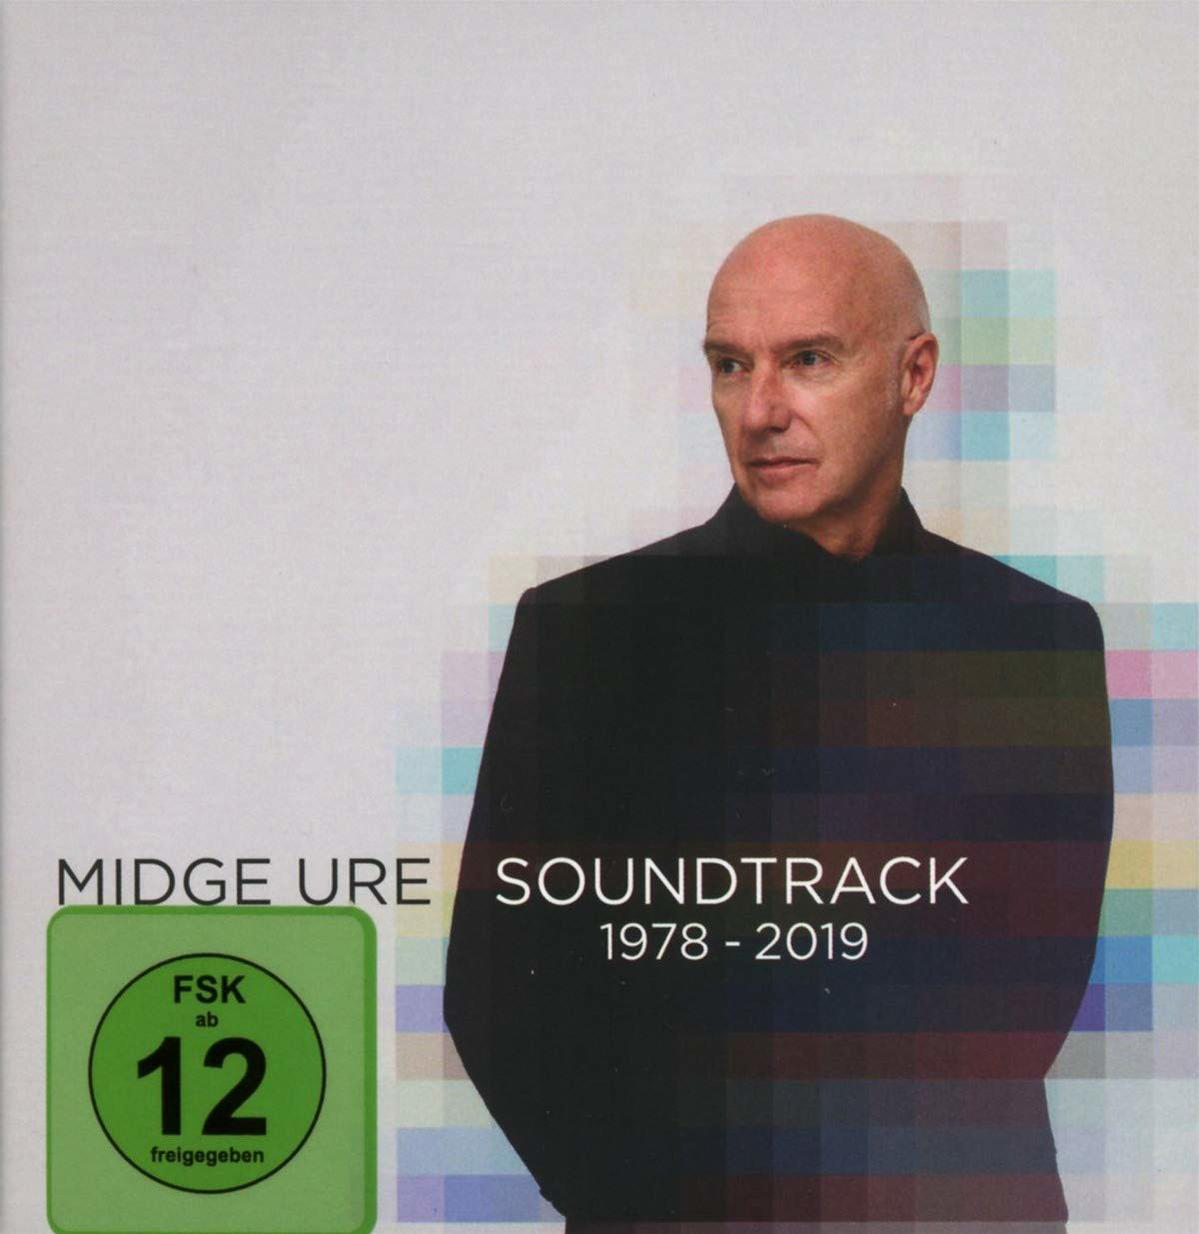 Midge Ure - Video) - Soundtrack:1978-2019 DVD + (CD